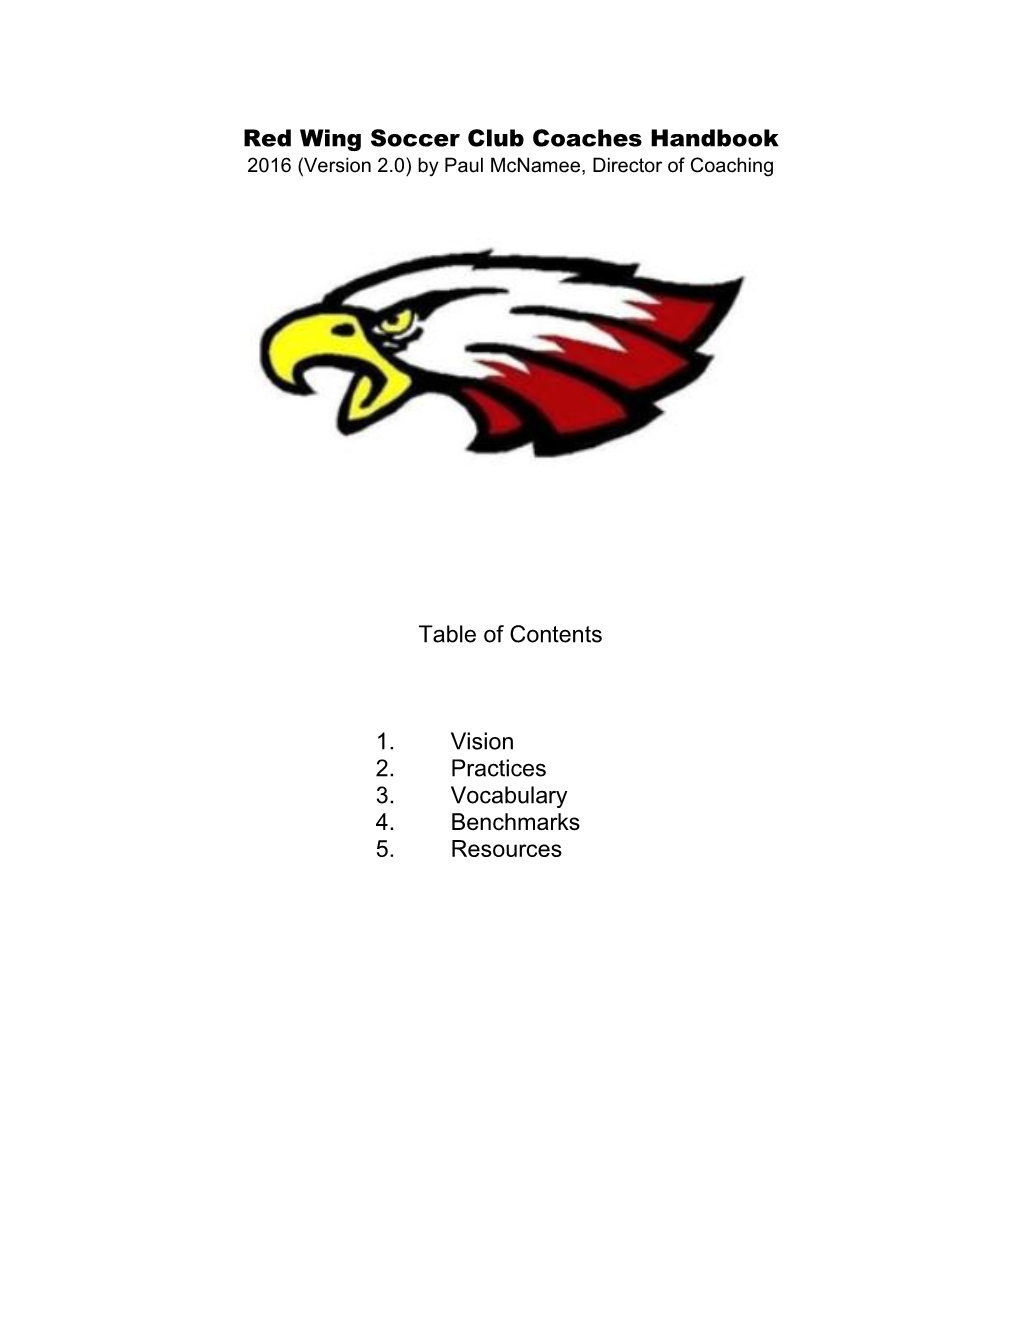 2016 RWSC Coaches Handbook